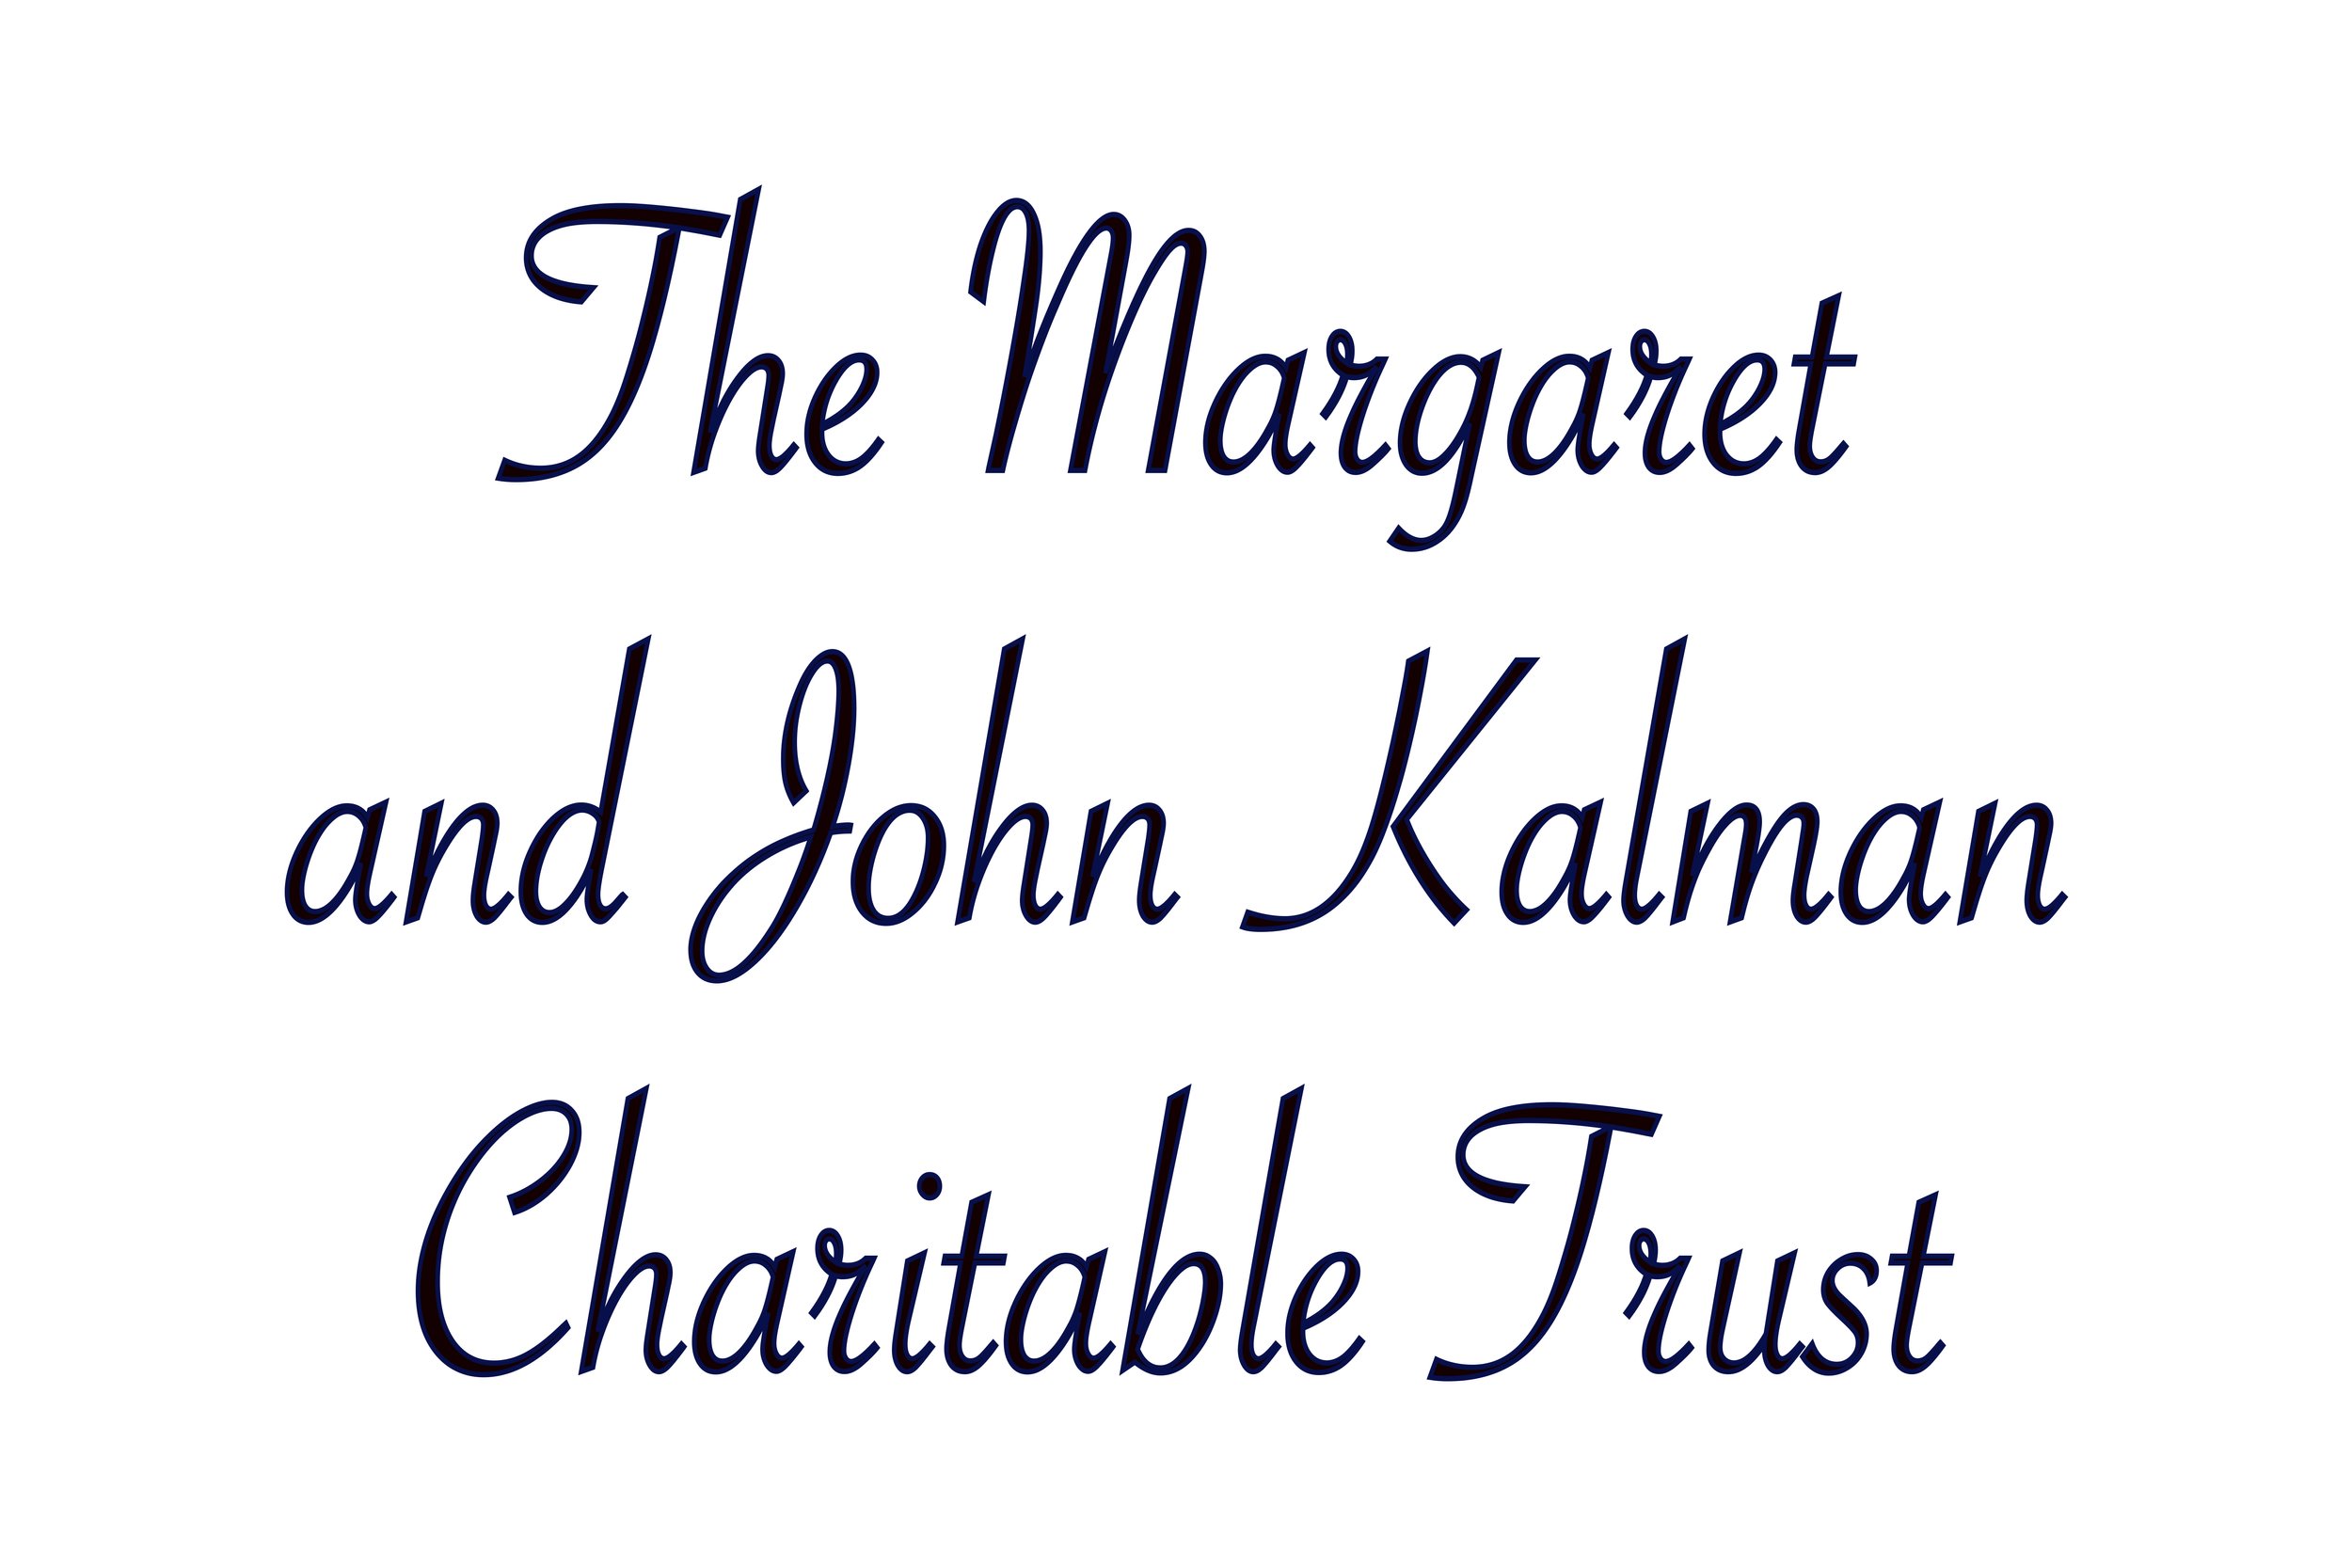 The Margaret and John Kalman Charitable Trust